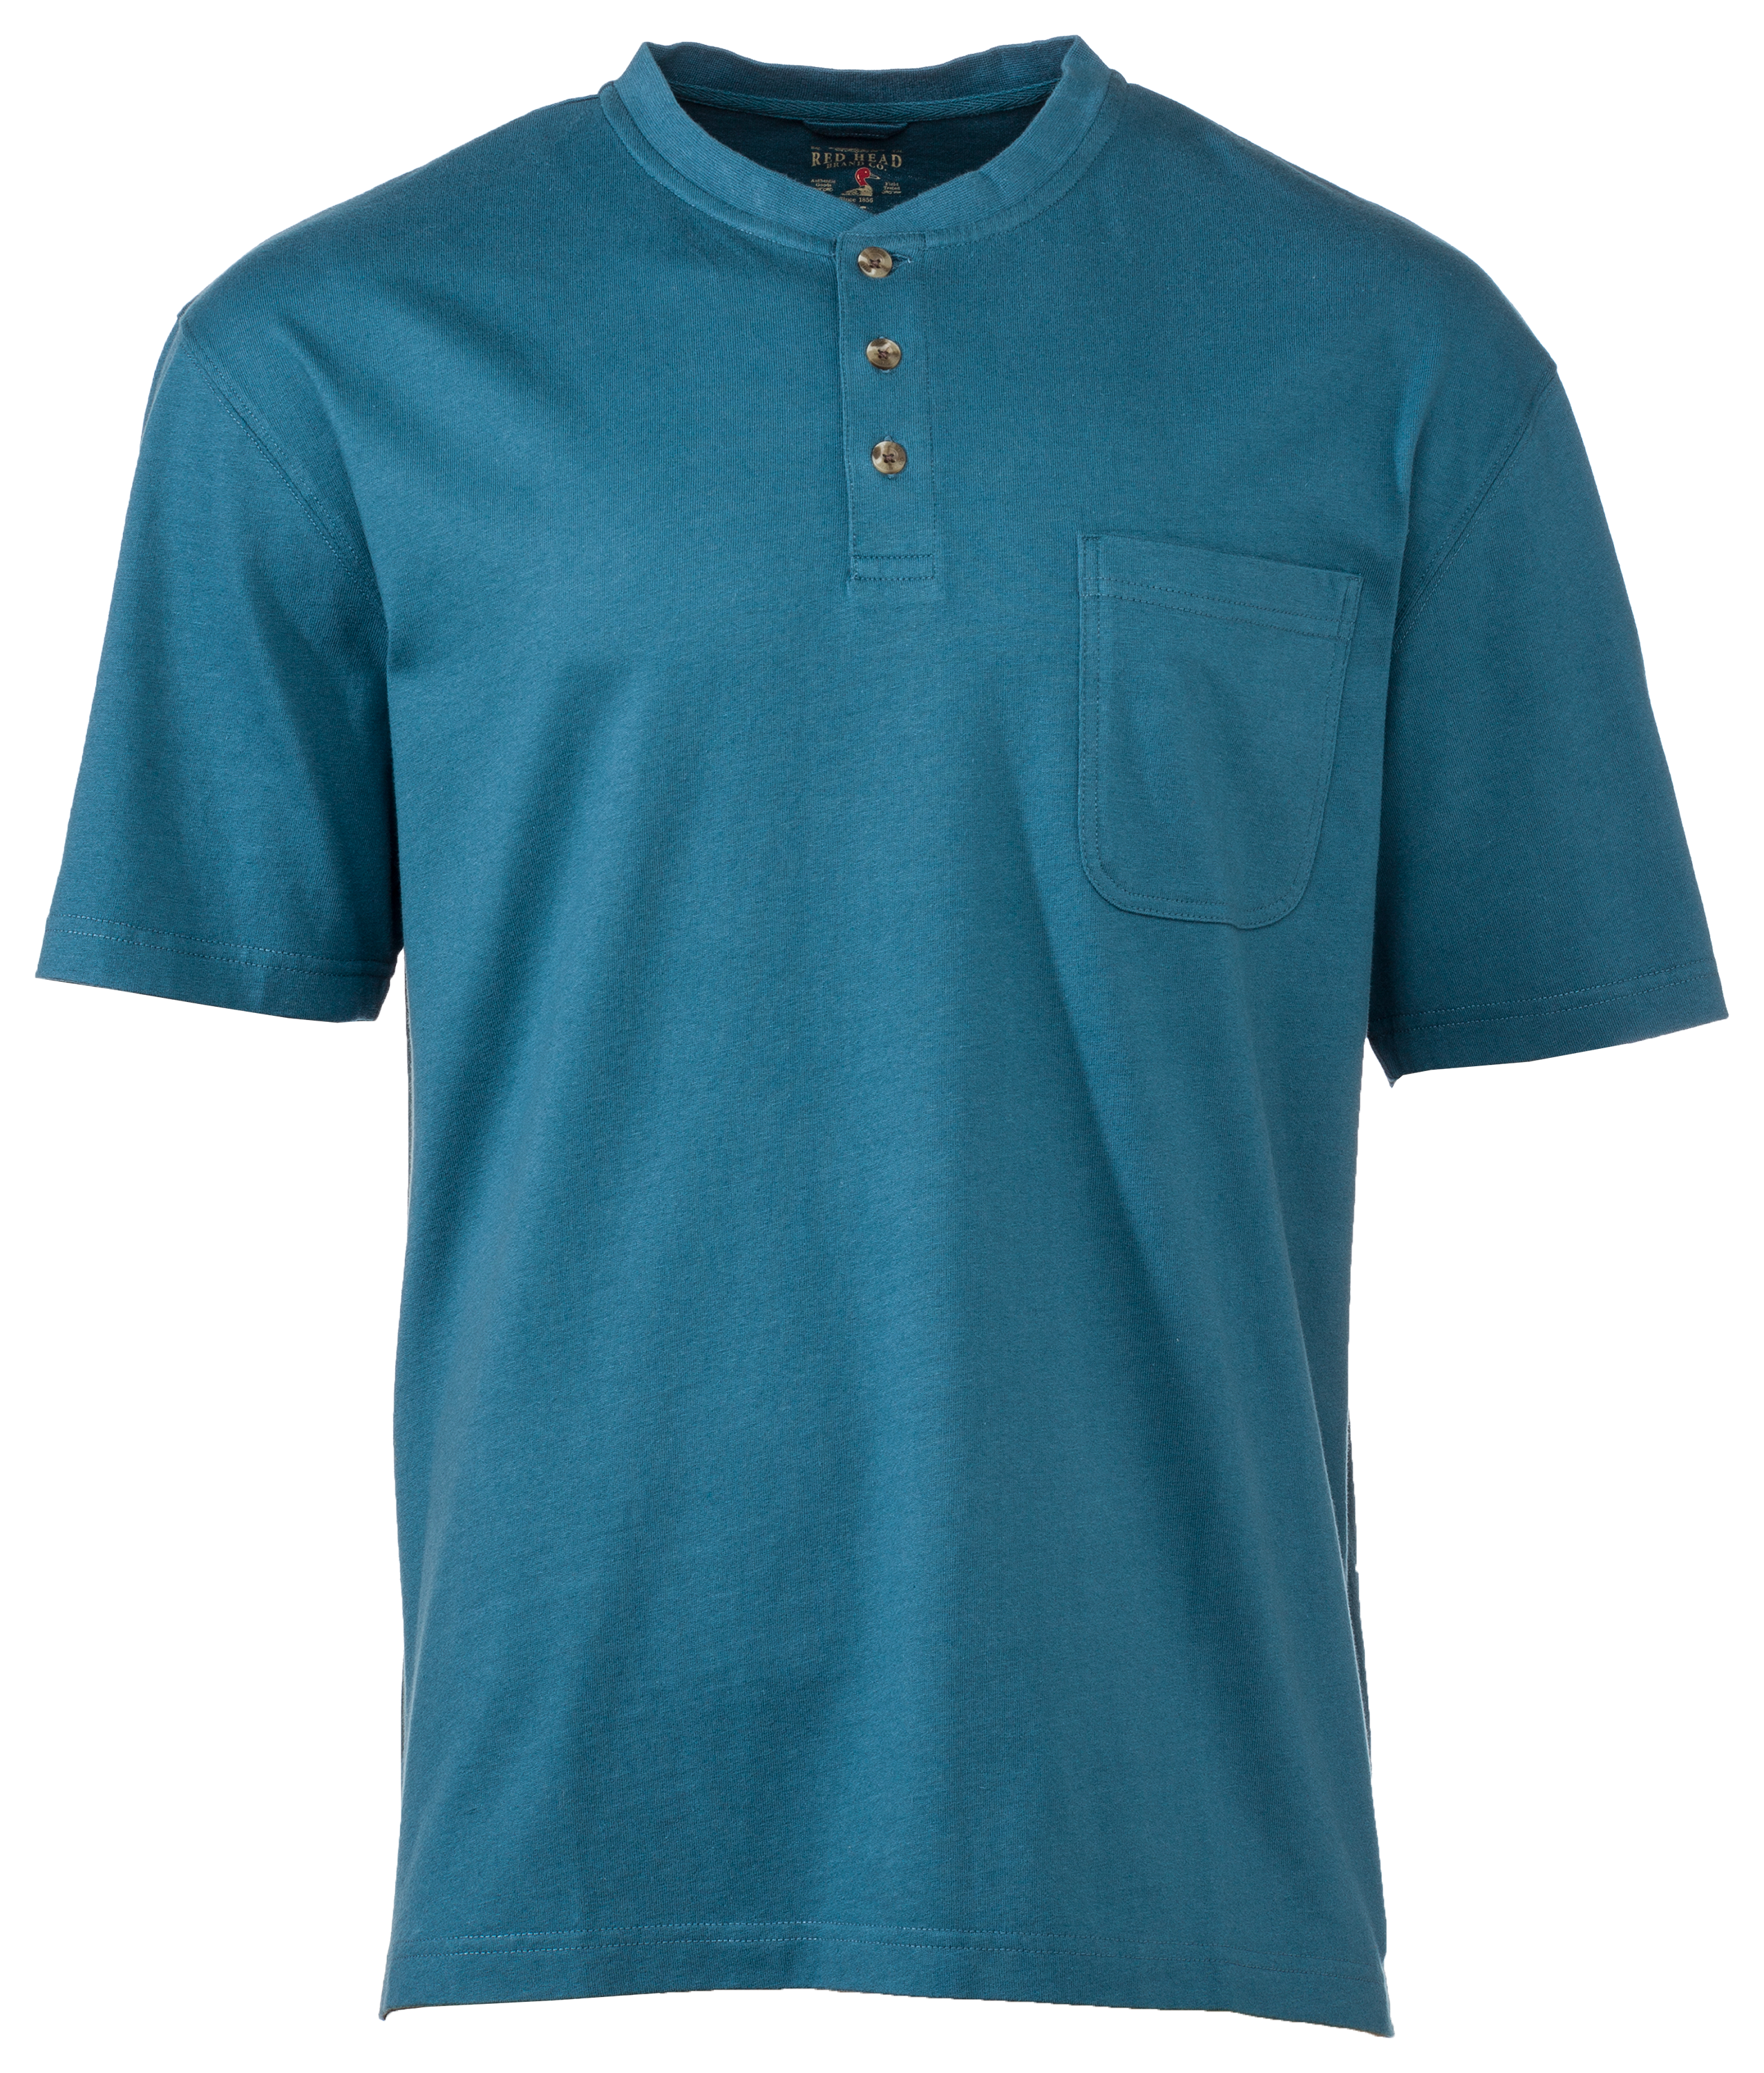 RedHead Henley Pocket Short-Sleeve Shirt for Men - Mallard - 2XL